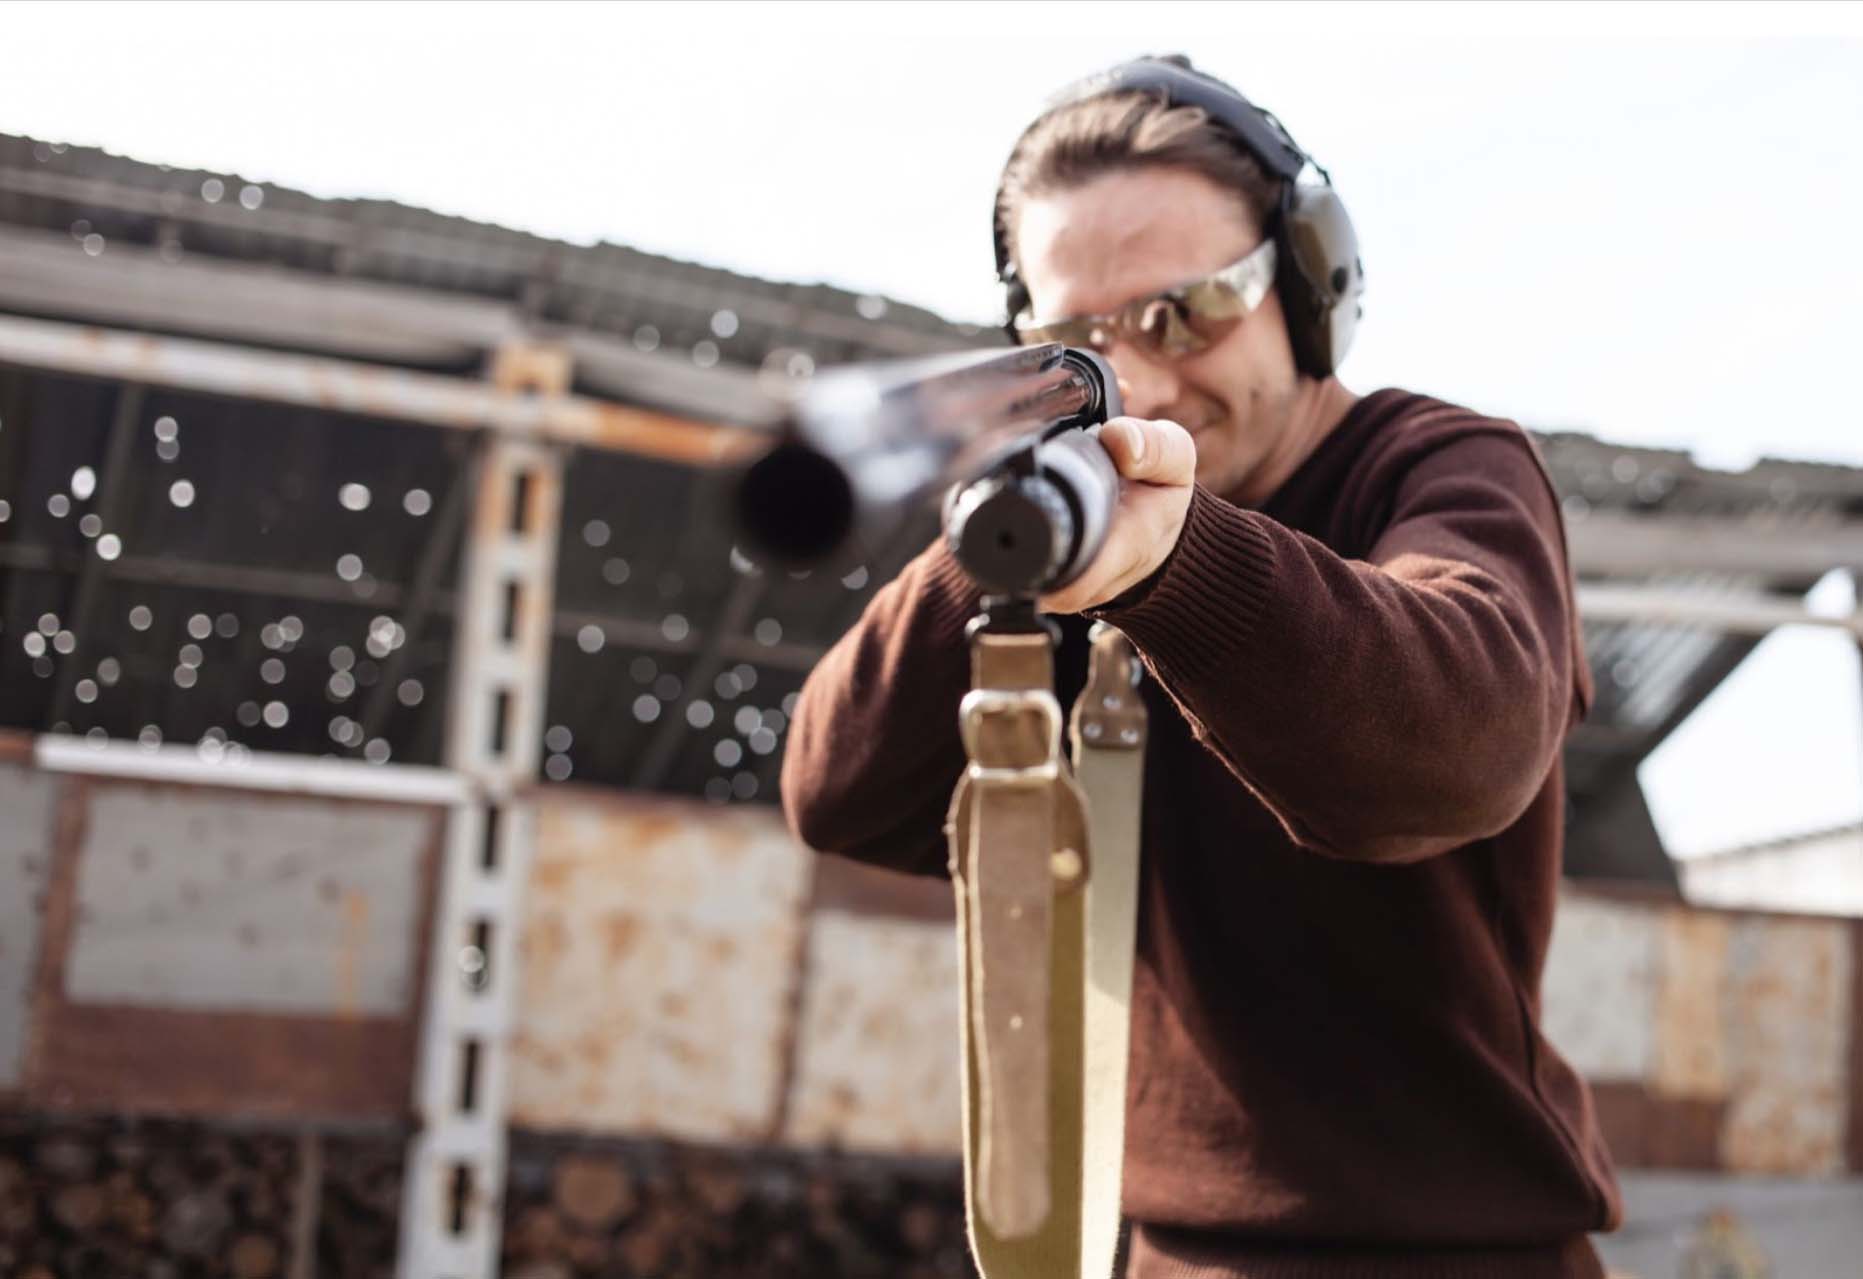 A man aims a shotgun at targets in a shooting range.